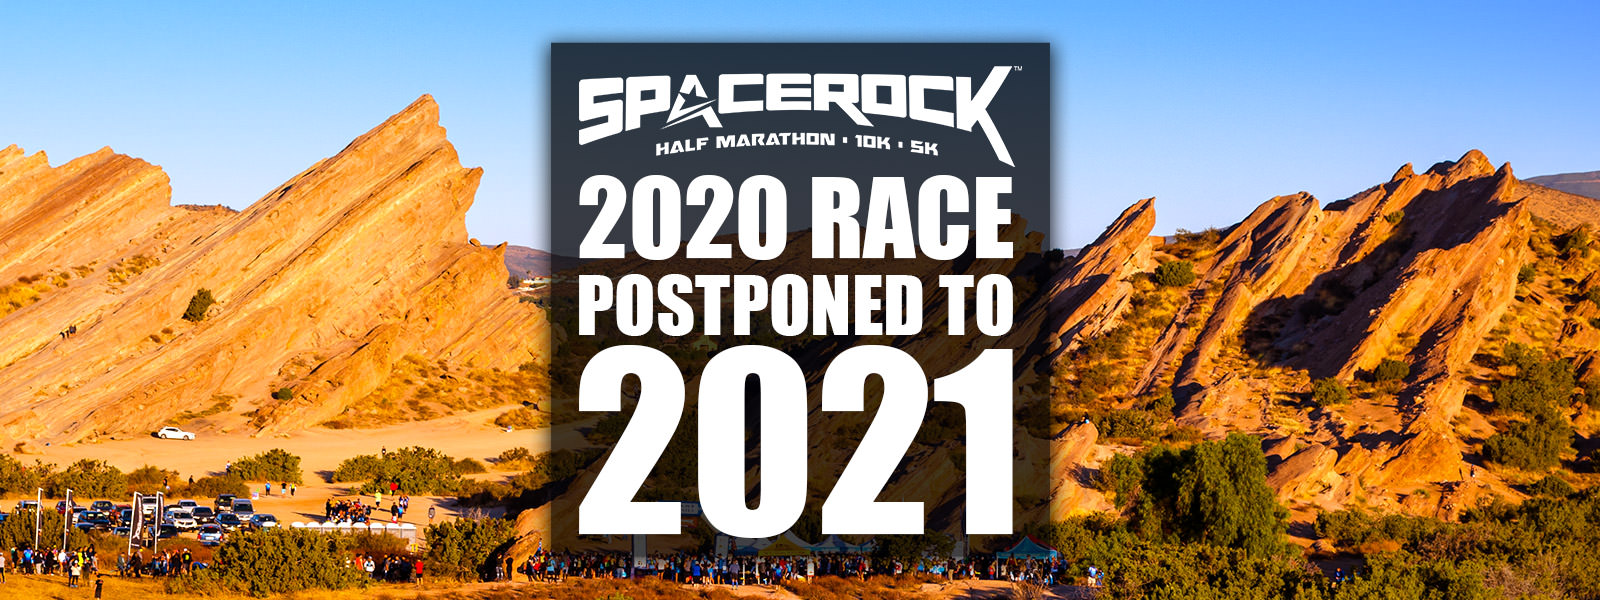 2020 Race Postponed